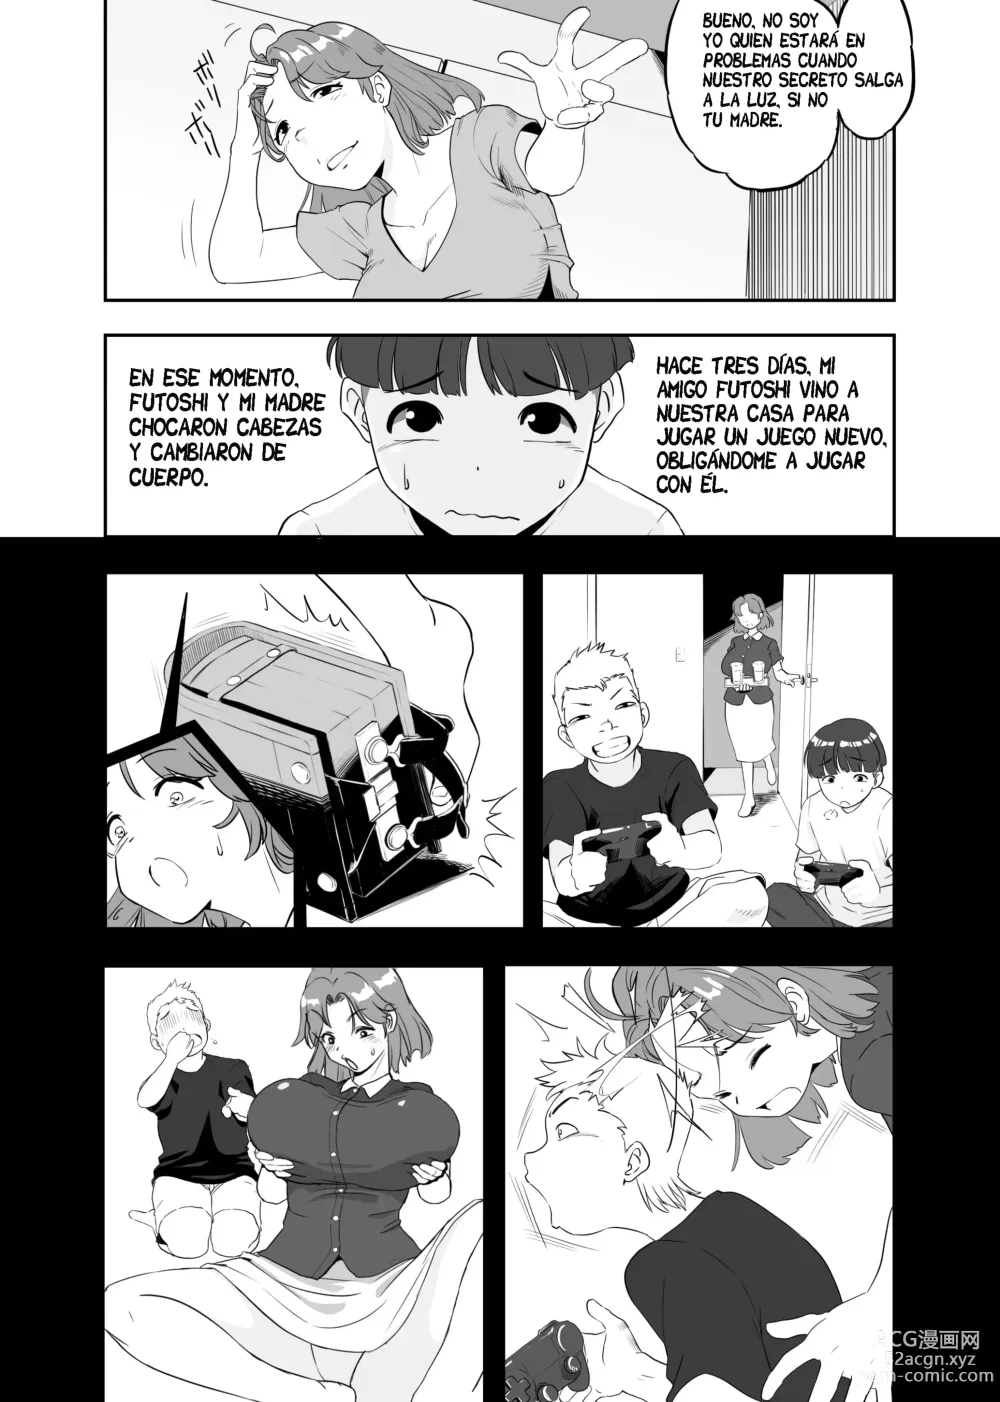 Page 6 of doujinshi Ese chico que odia ser mamá